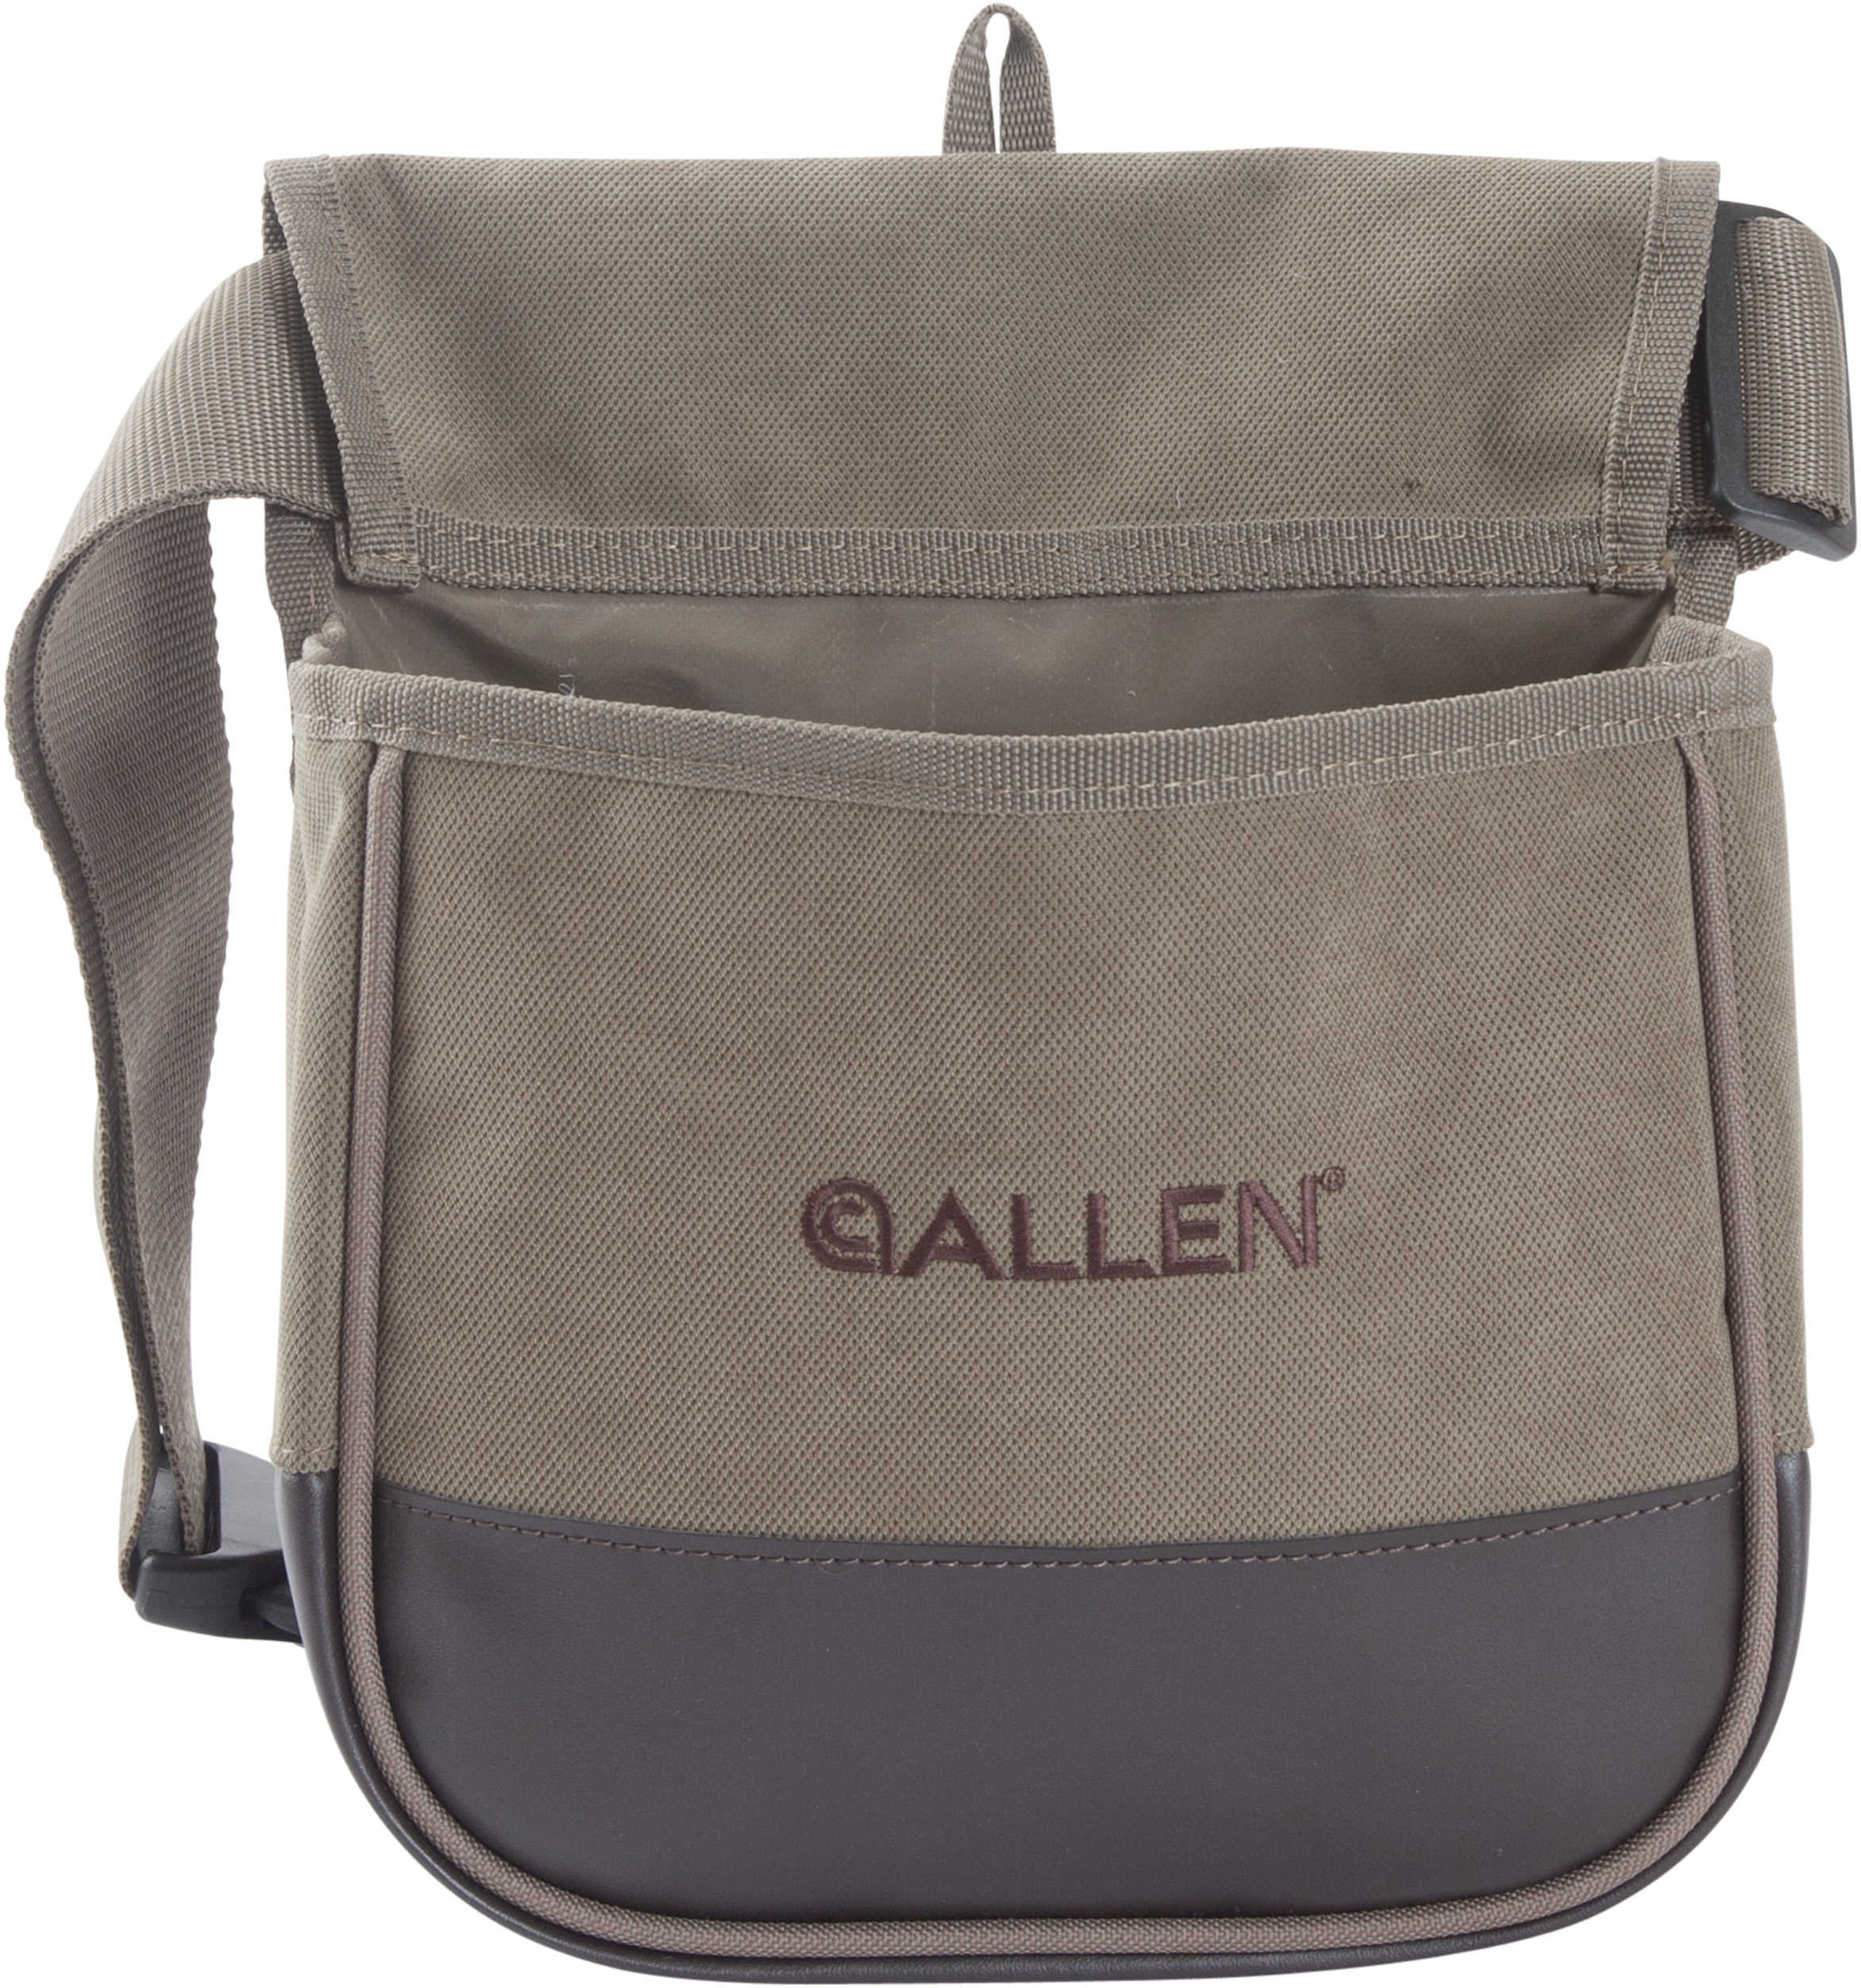 Allen 2306 Select Double Compartment Tan Canvas Shell Bag